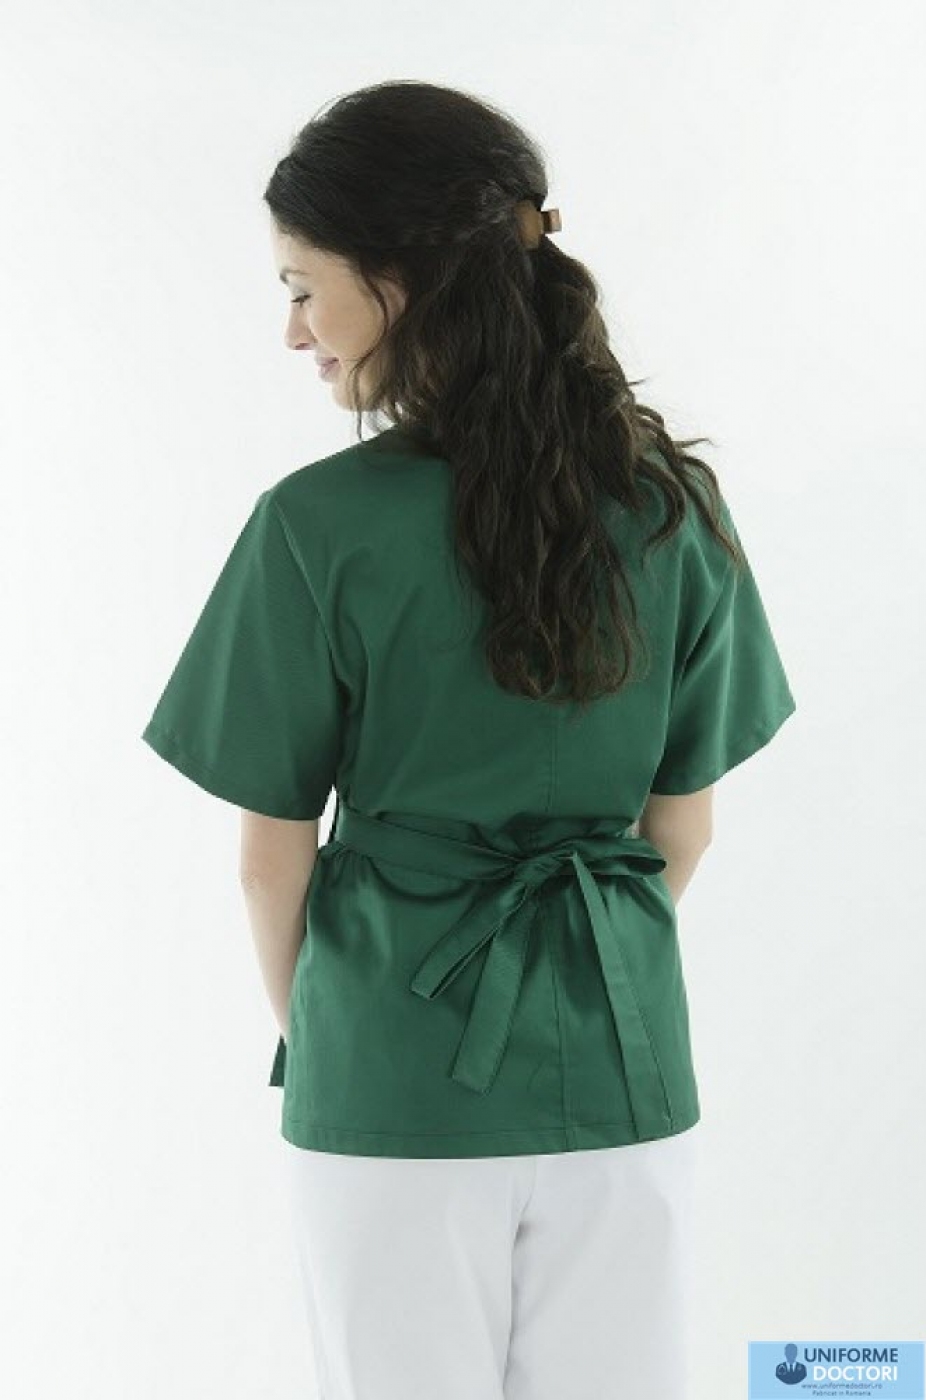 Uniforme medicale - Halat medical tip kimono, maneca scurta si cordon